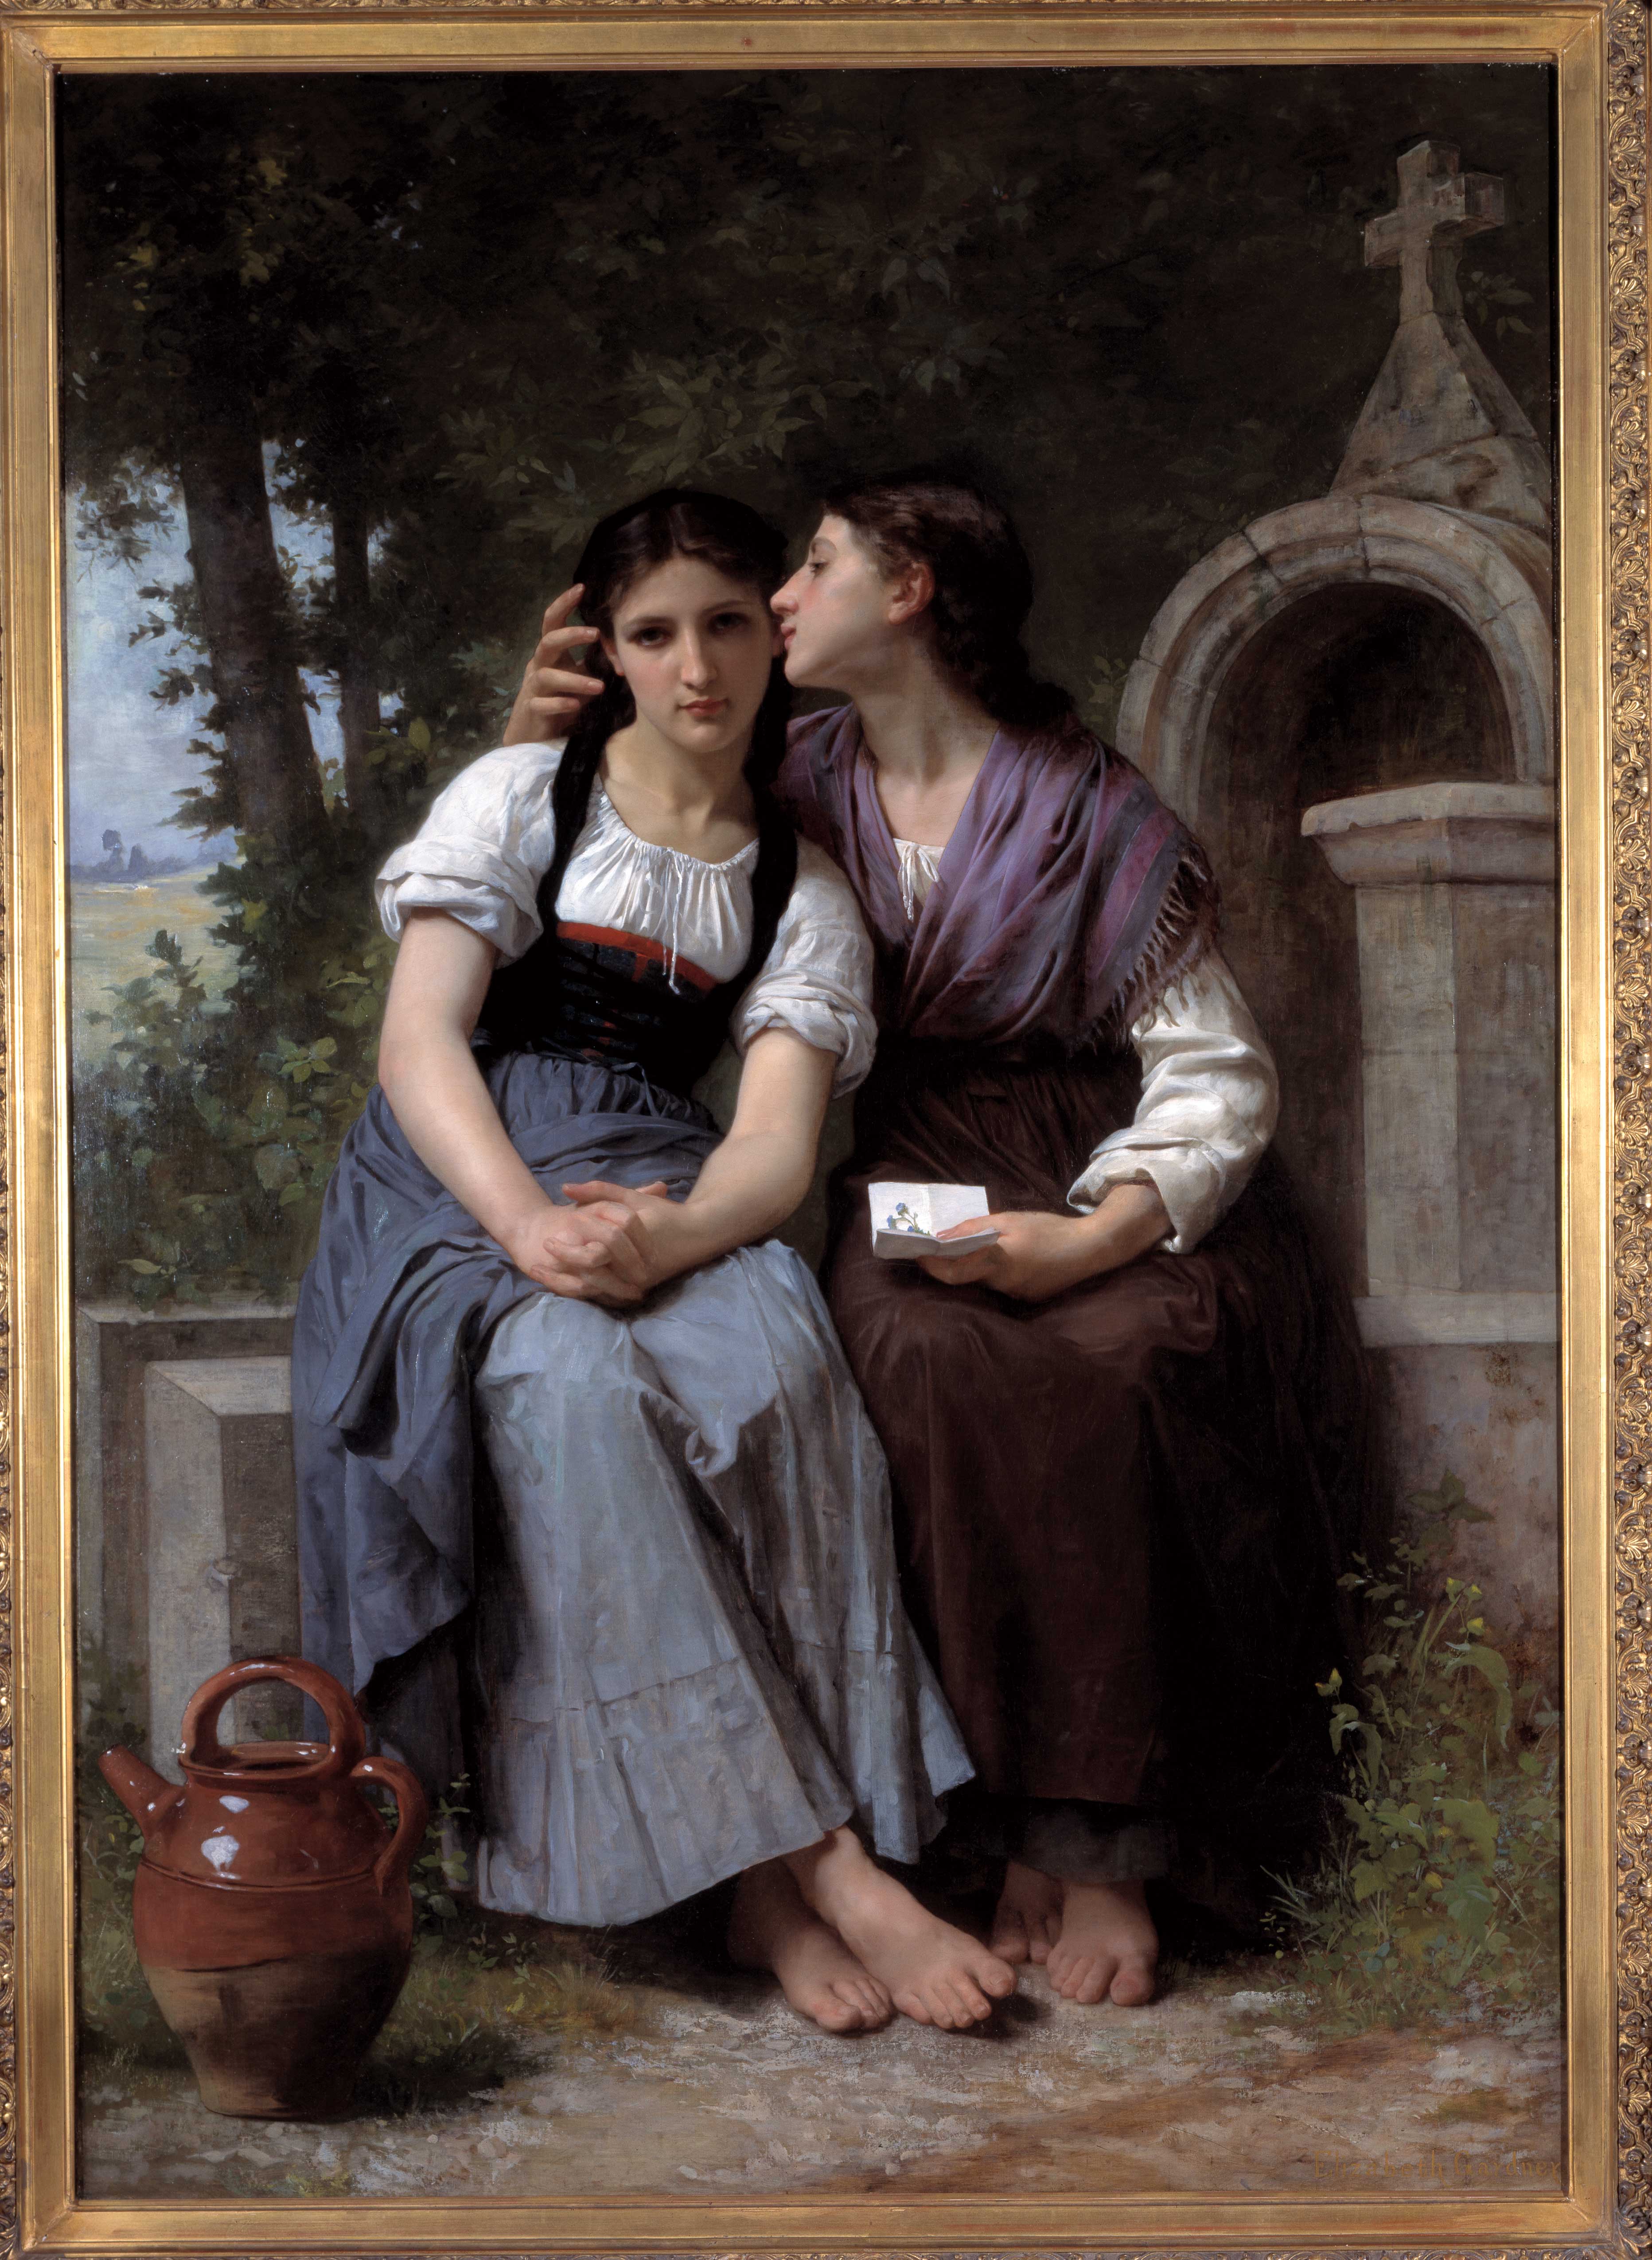 La Confidence by Elizabeth Jane Gardner Bouguereau - kb. 1880 - 172,7 x 119,7 cm 